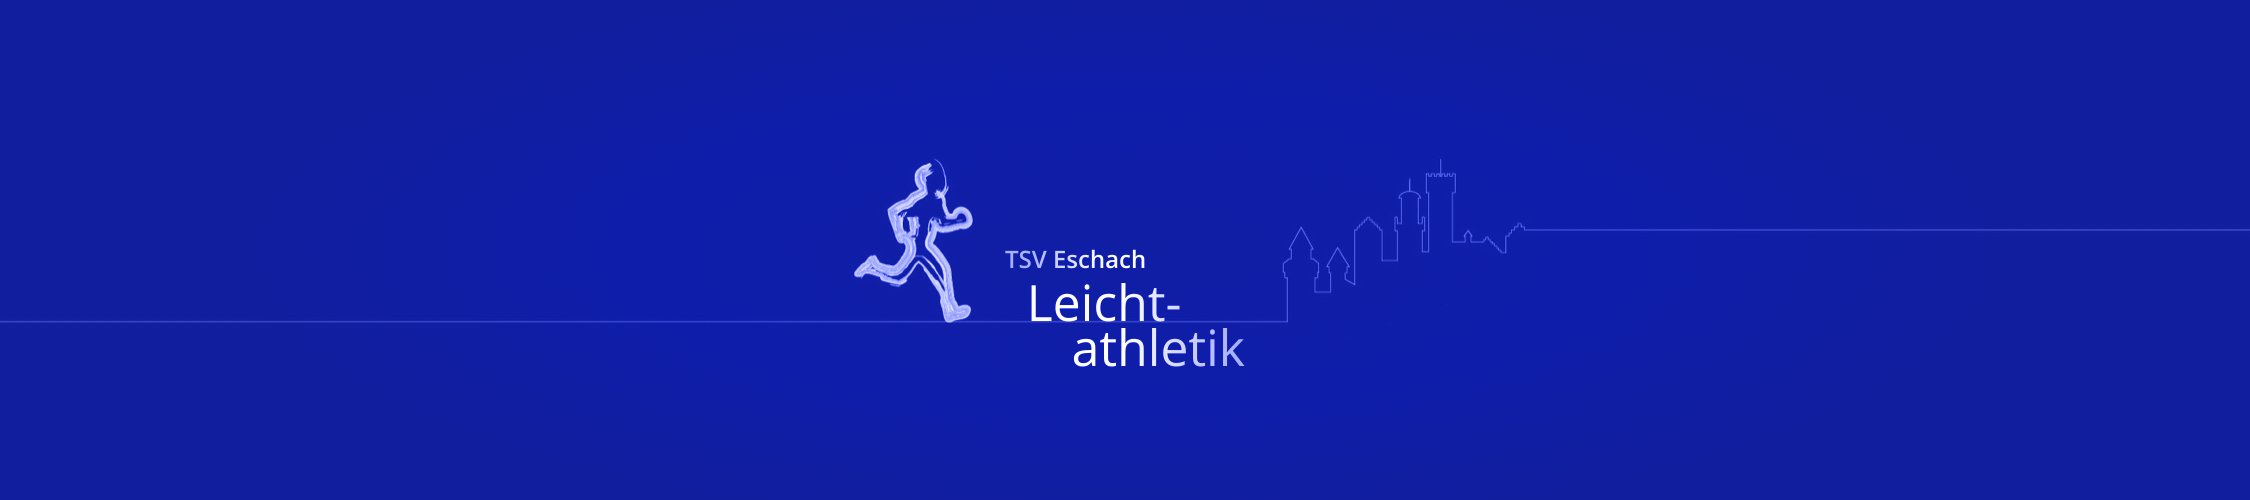 TSV-Eschach Leichtathletik